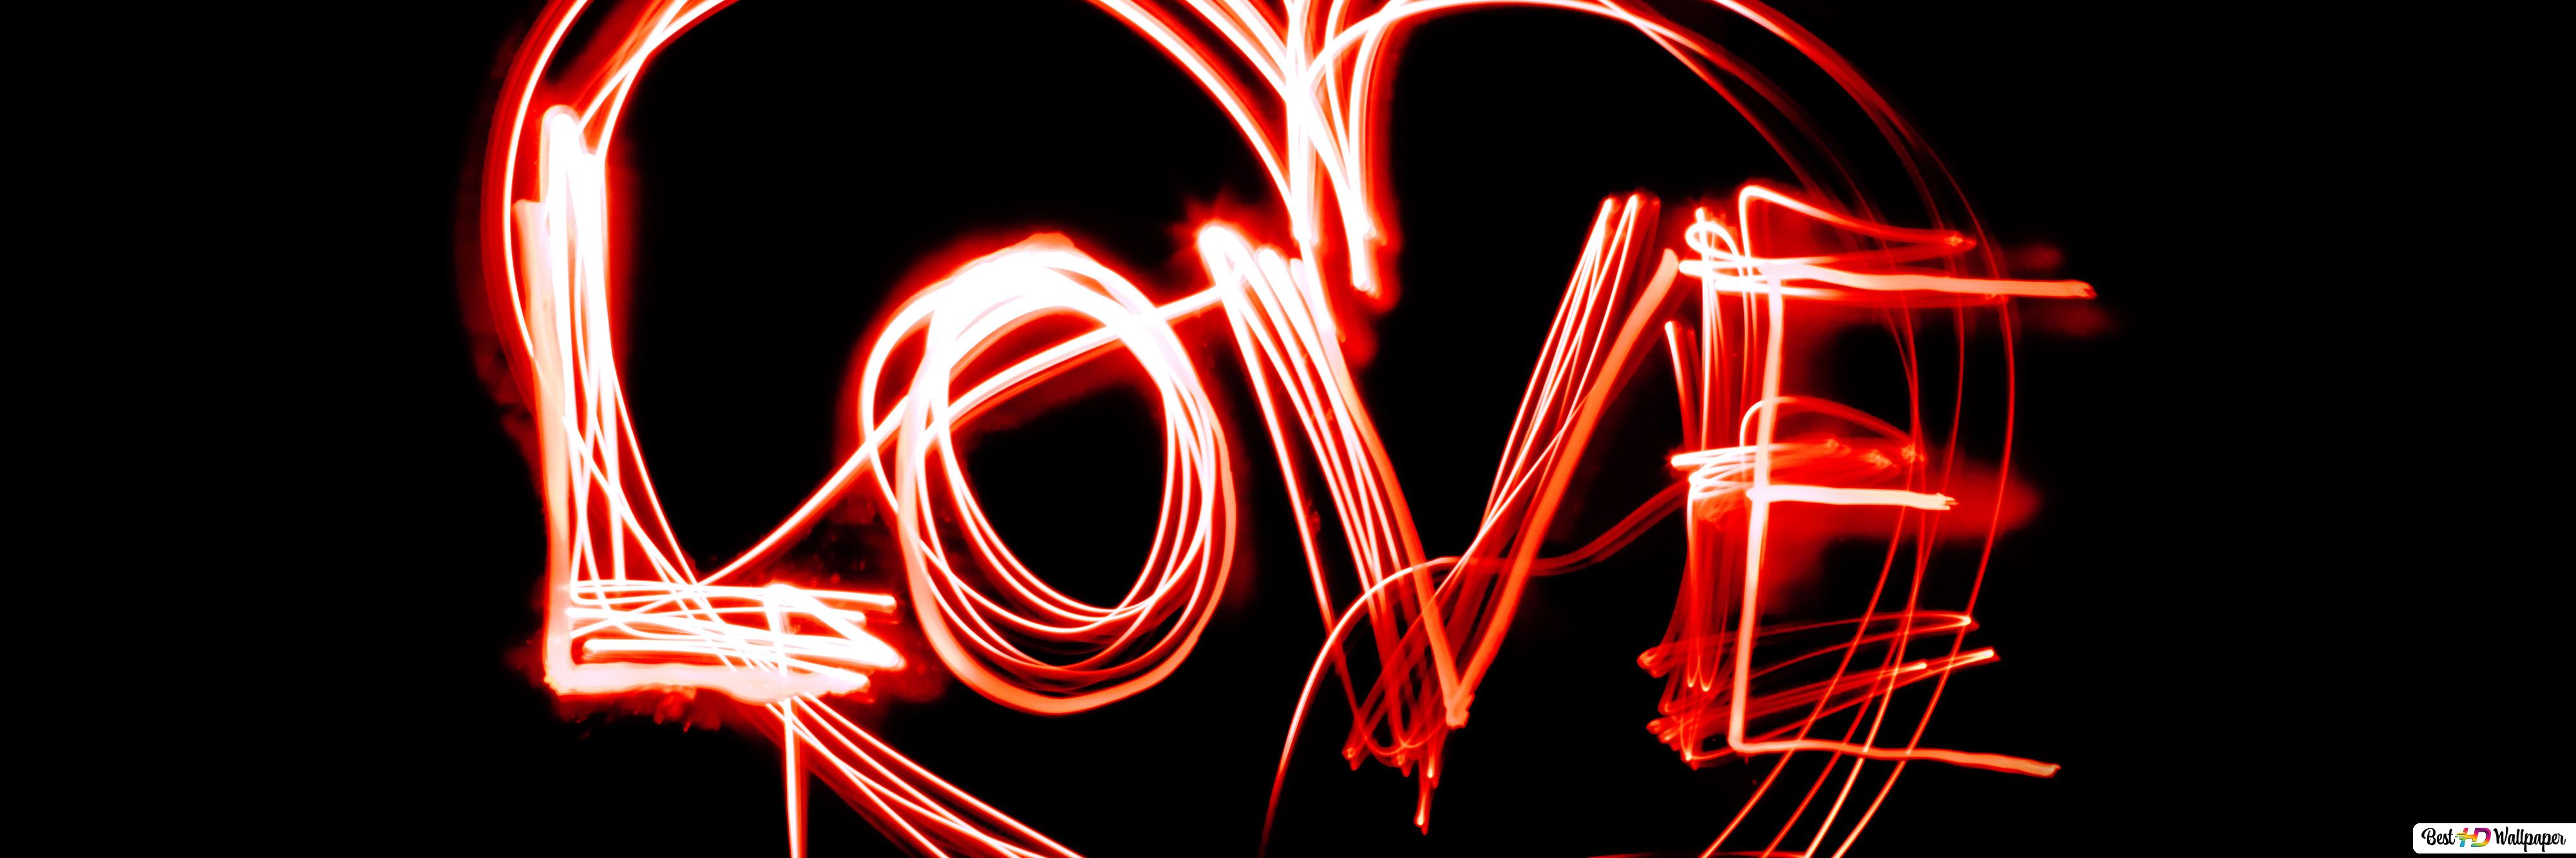 Valentine's day neon lights HD wallpaper download's Day wallpaper